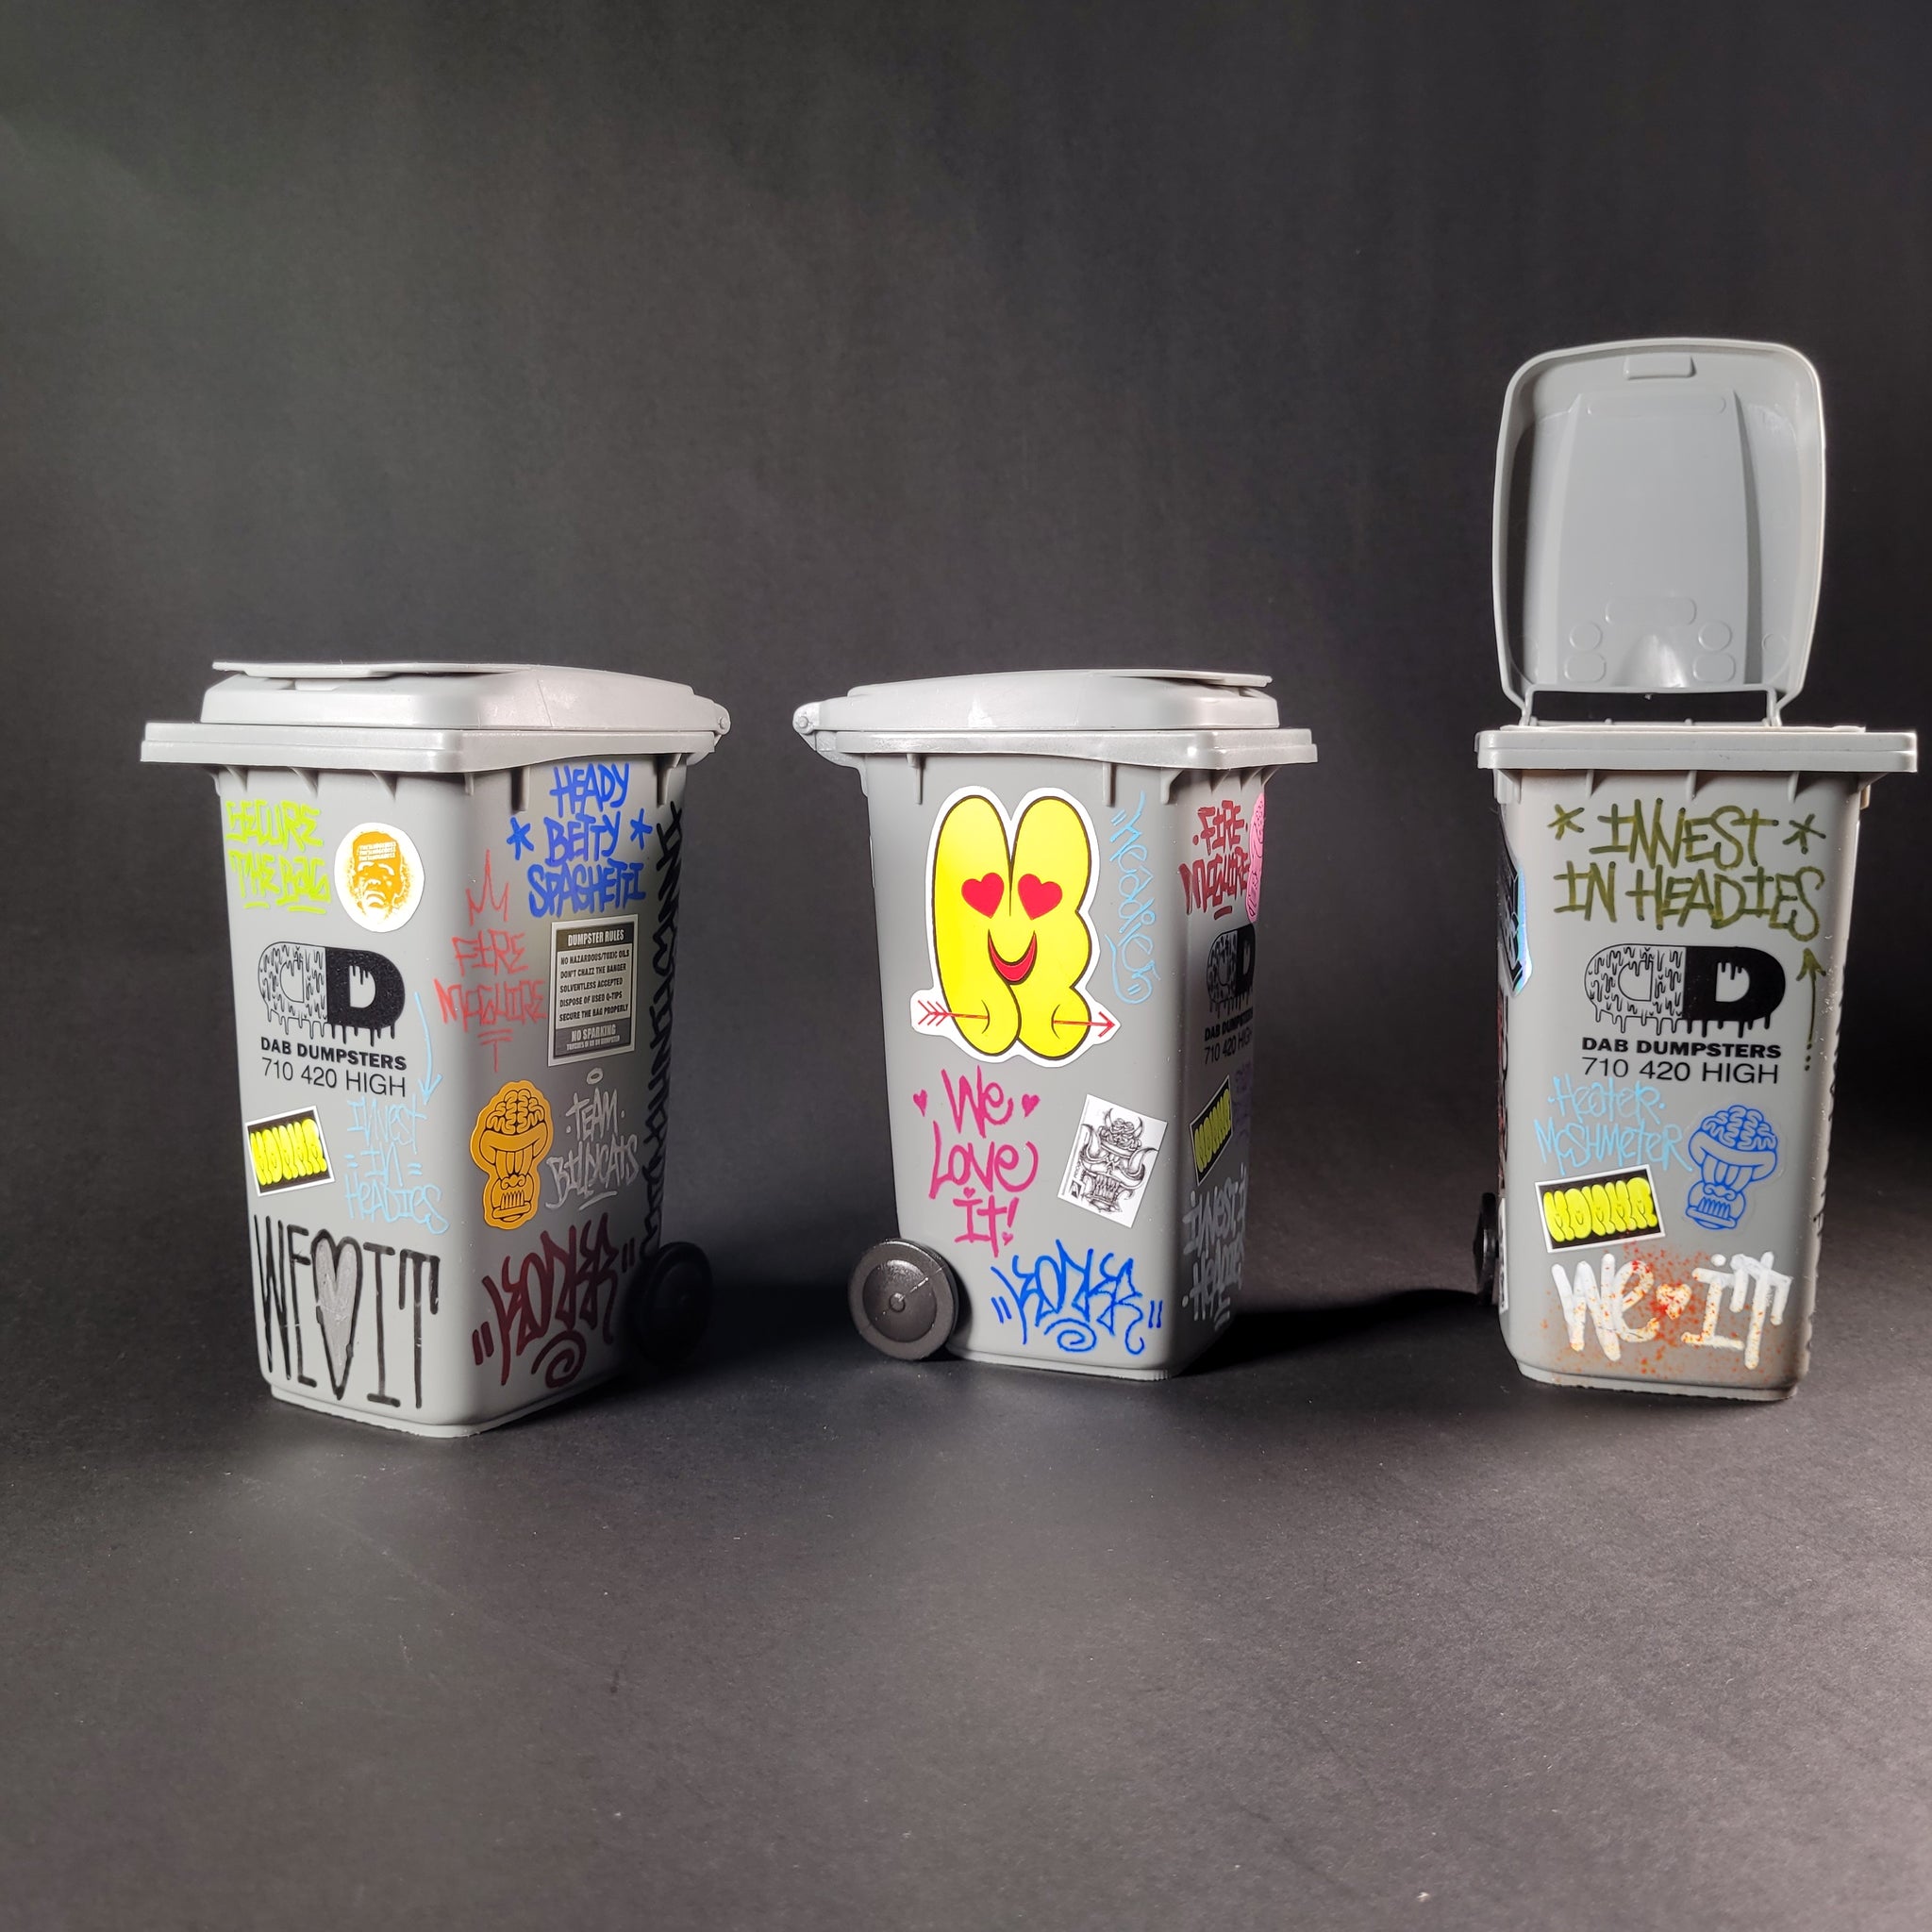 Created 2 Conquer x Dab Dumpsters - Tagged Qtip Bins